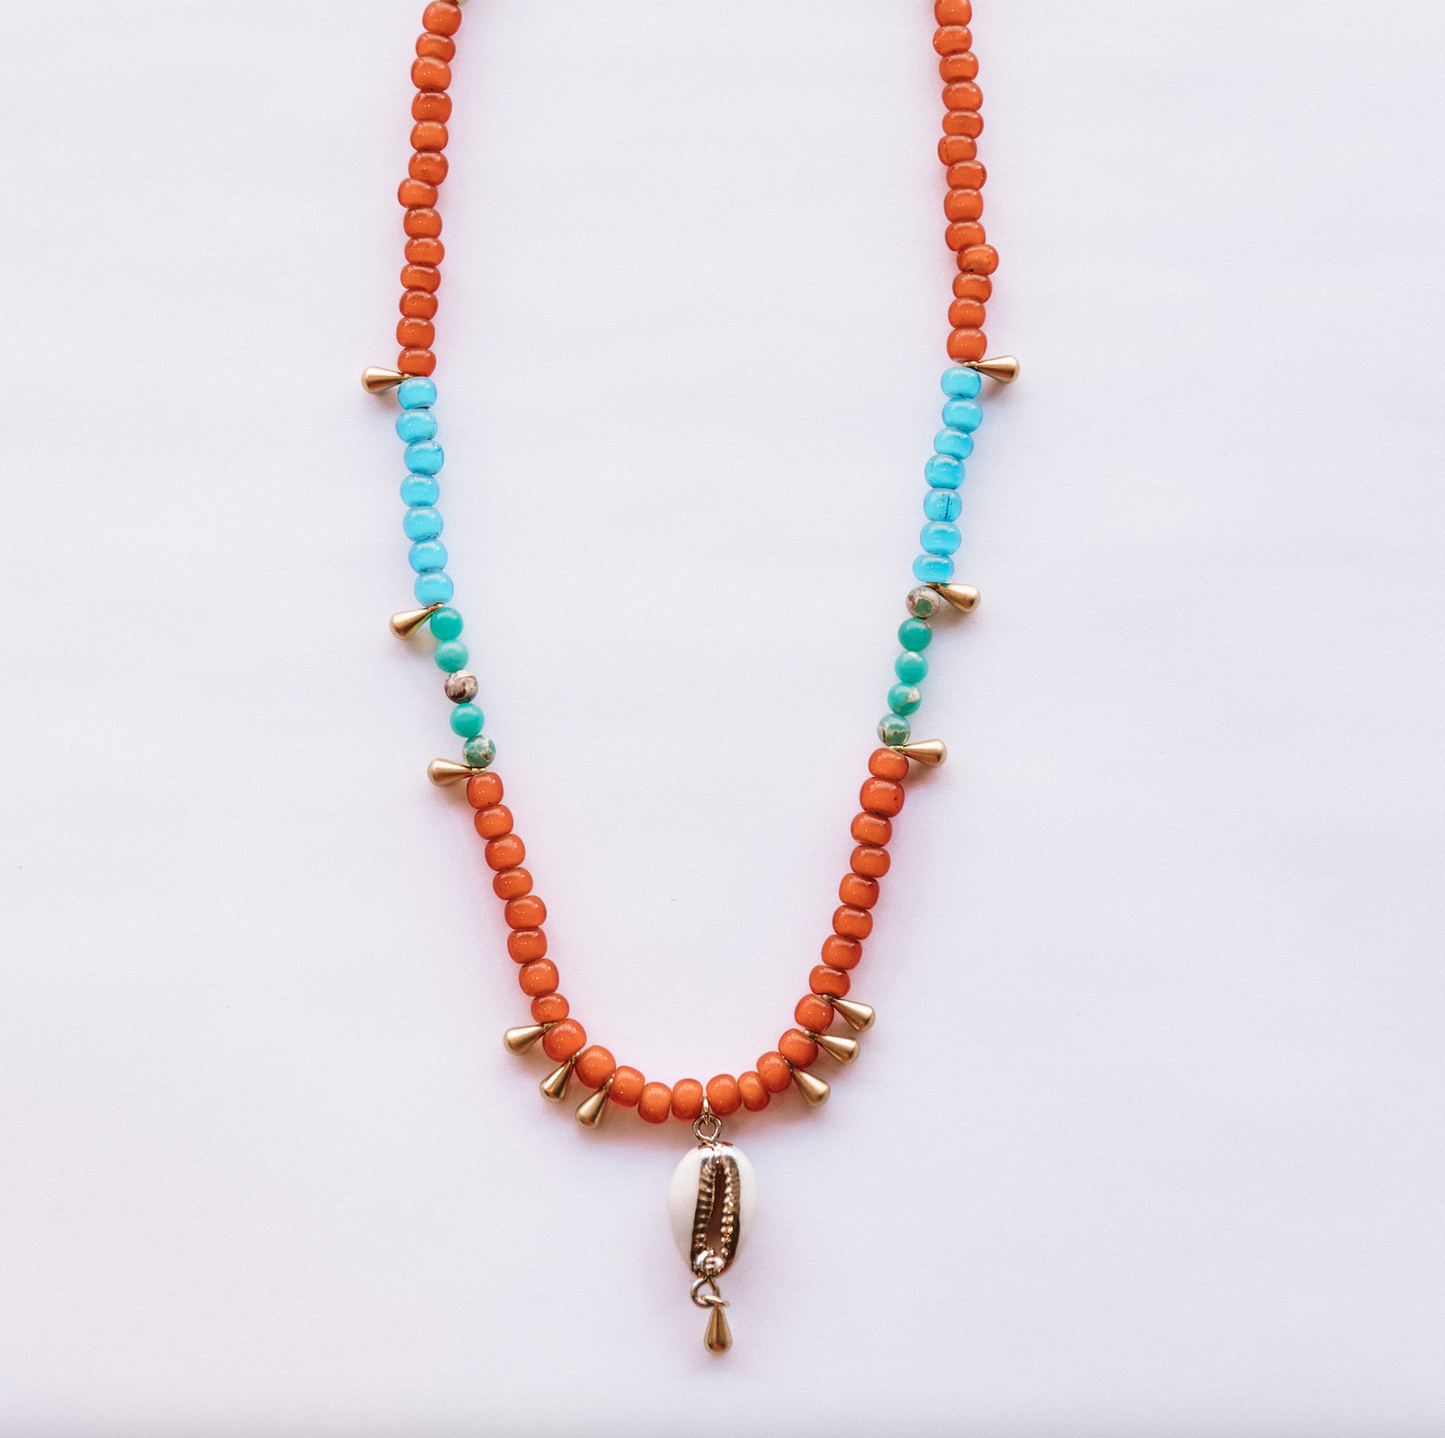 The Orange Aqua And Turquoise Cowrie Necklace